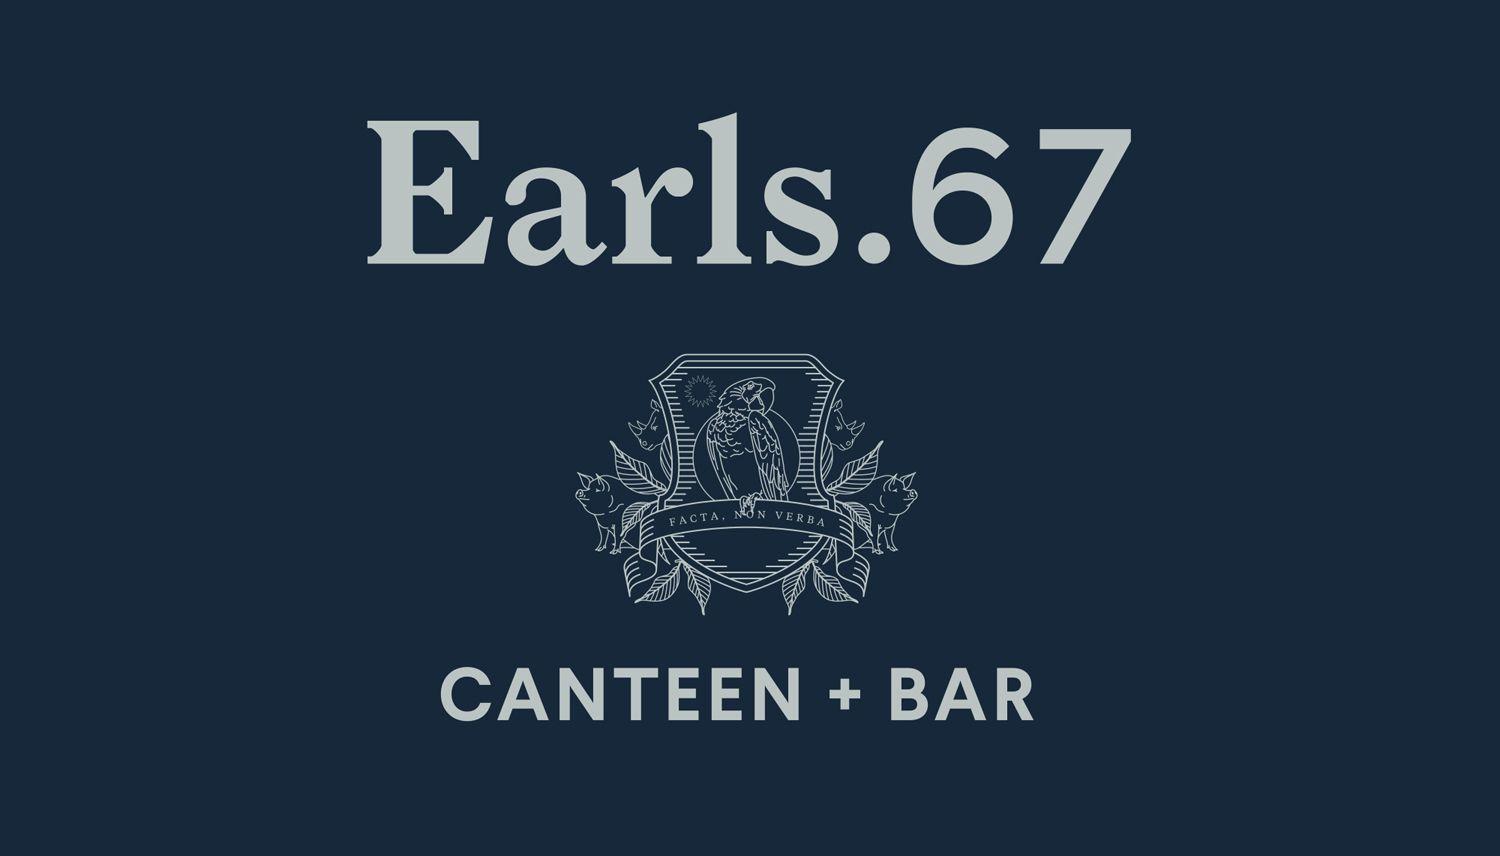 Earl's Logo - New Brand Identity for Earls.67 by Glasfurd & Walker — BP&O